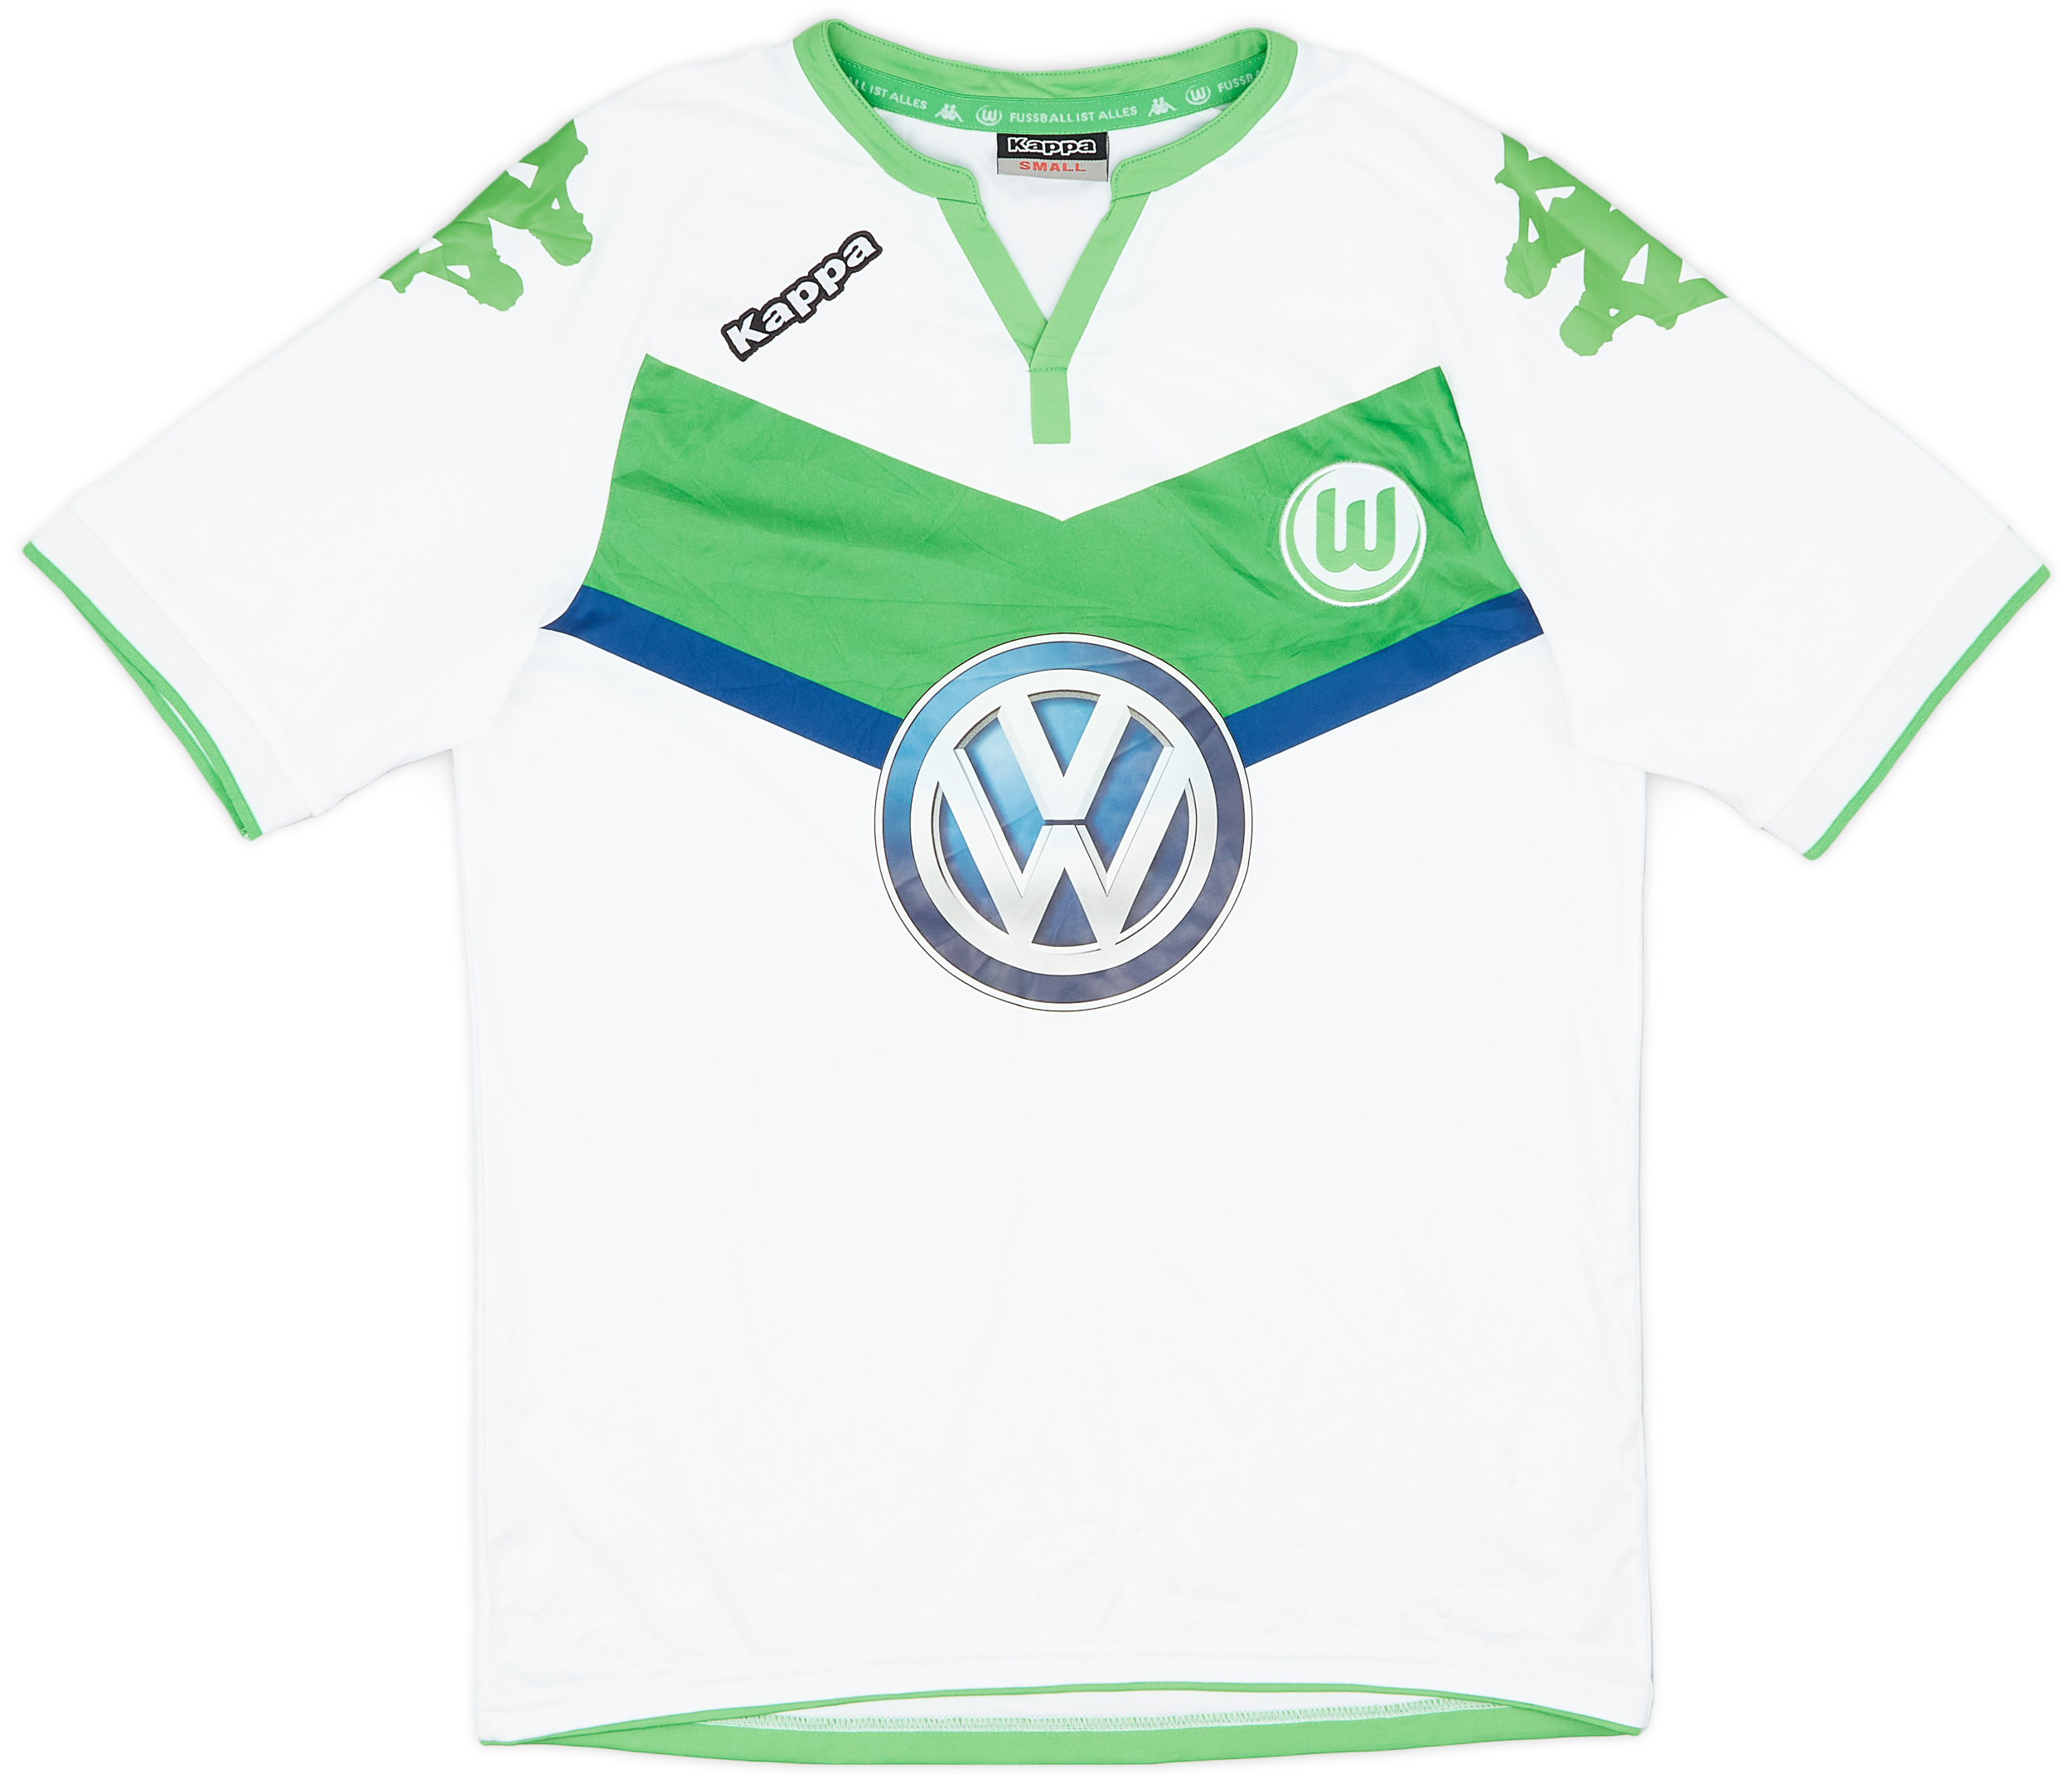 Retro VfL Wolfsburg Shirt